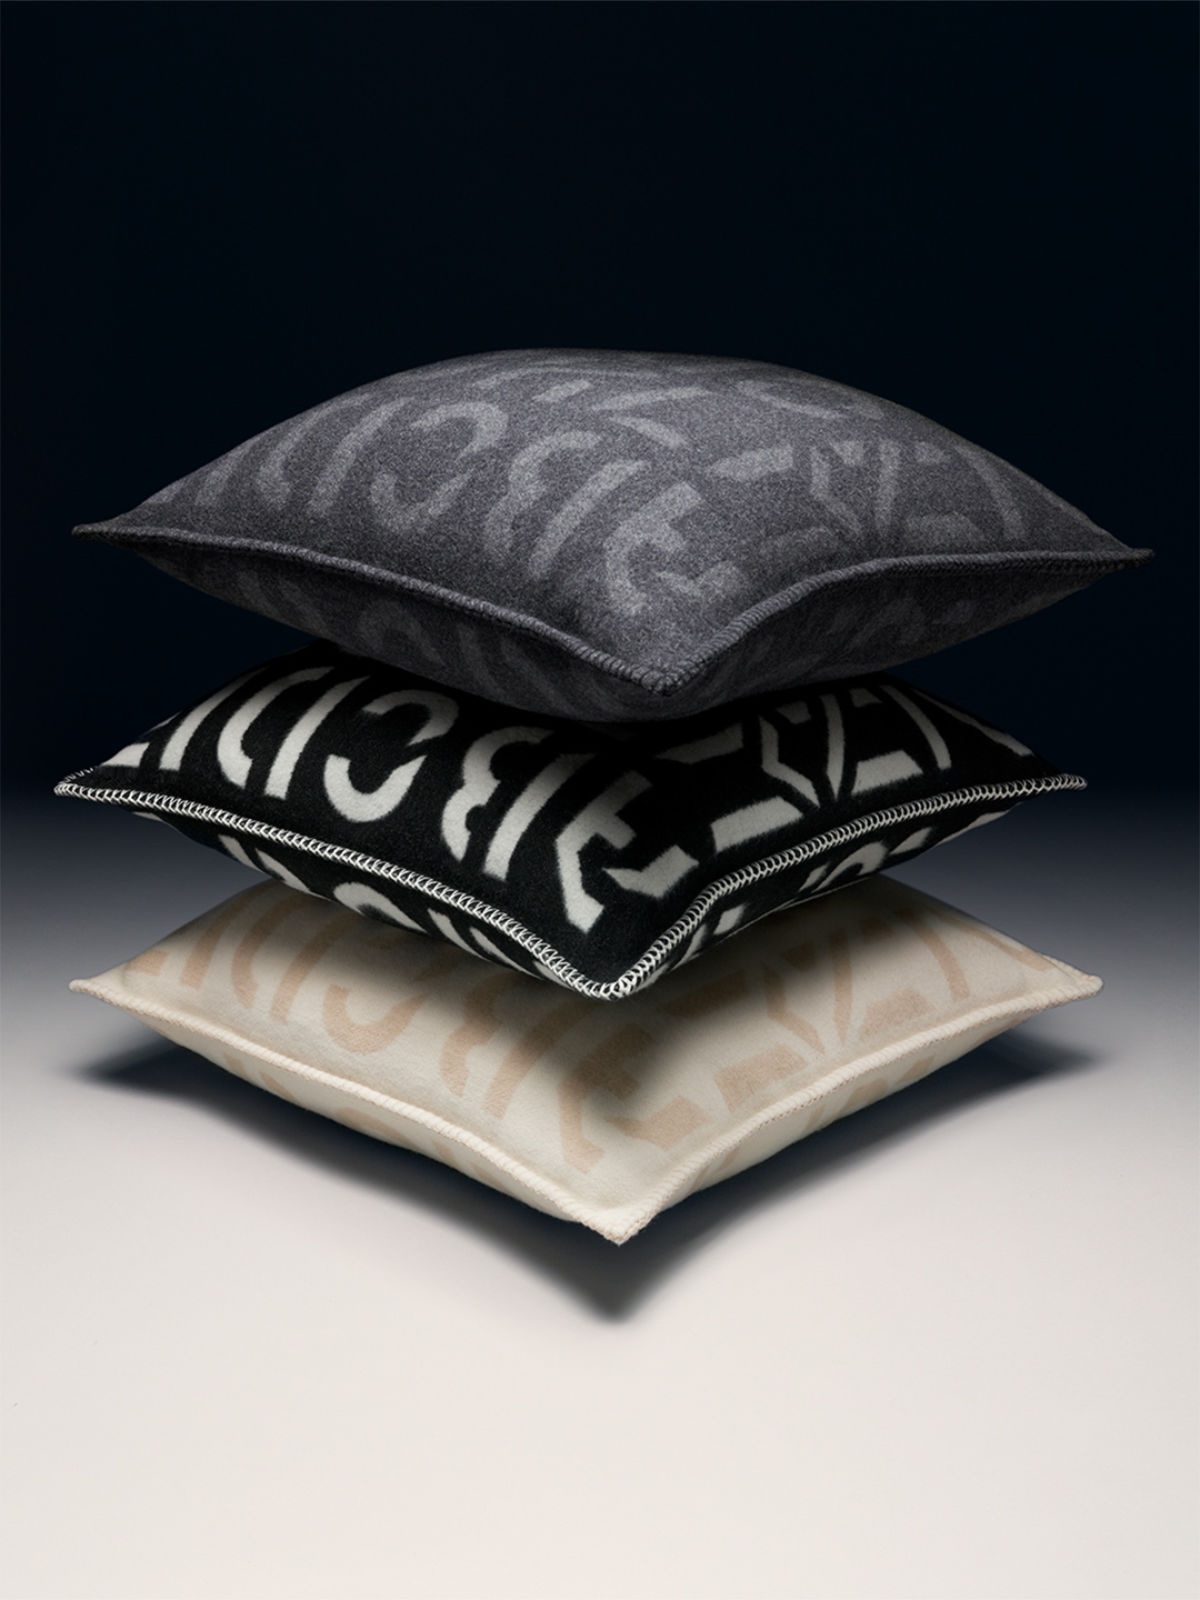 Byredo's Byproduct 54 – Alphabeta Cushions Salt & Pepper, Dune And Charbon